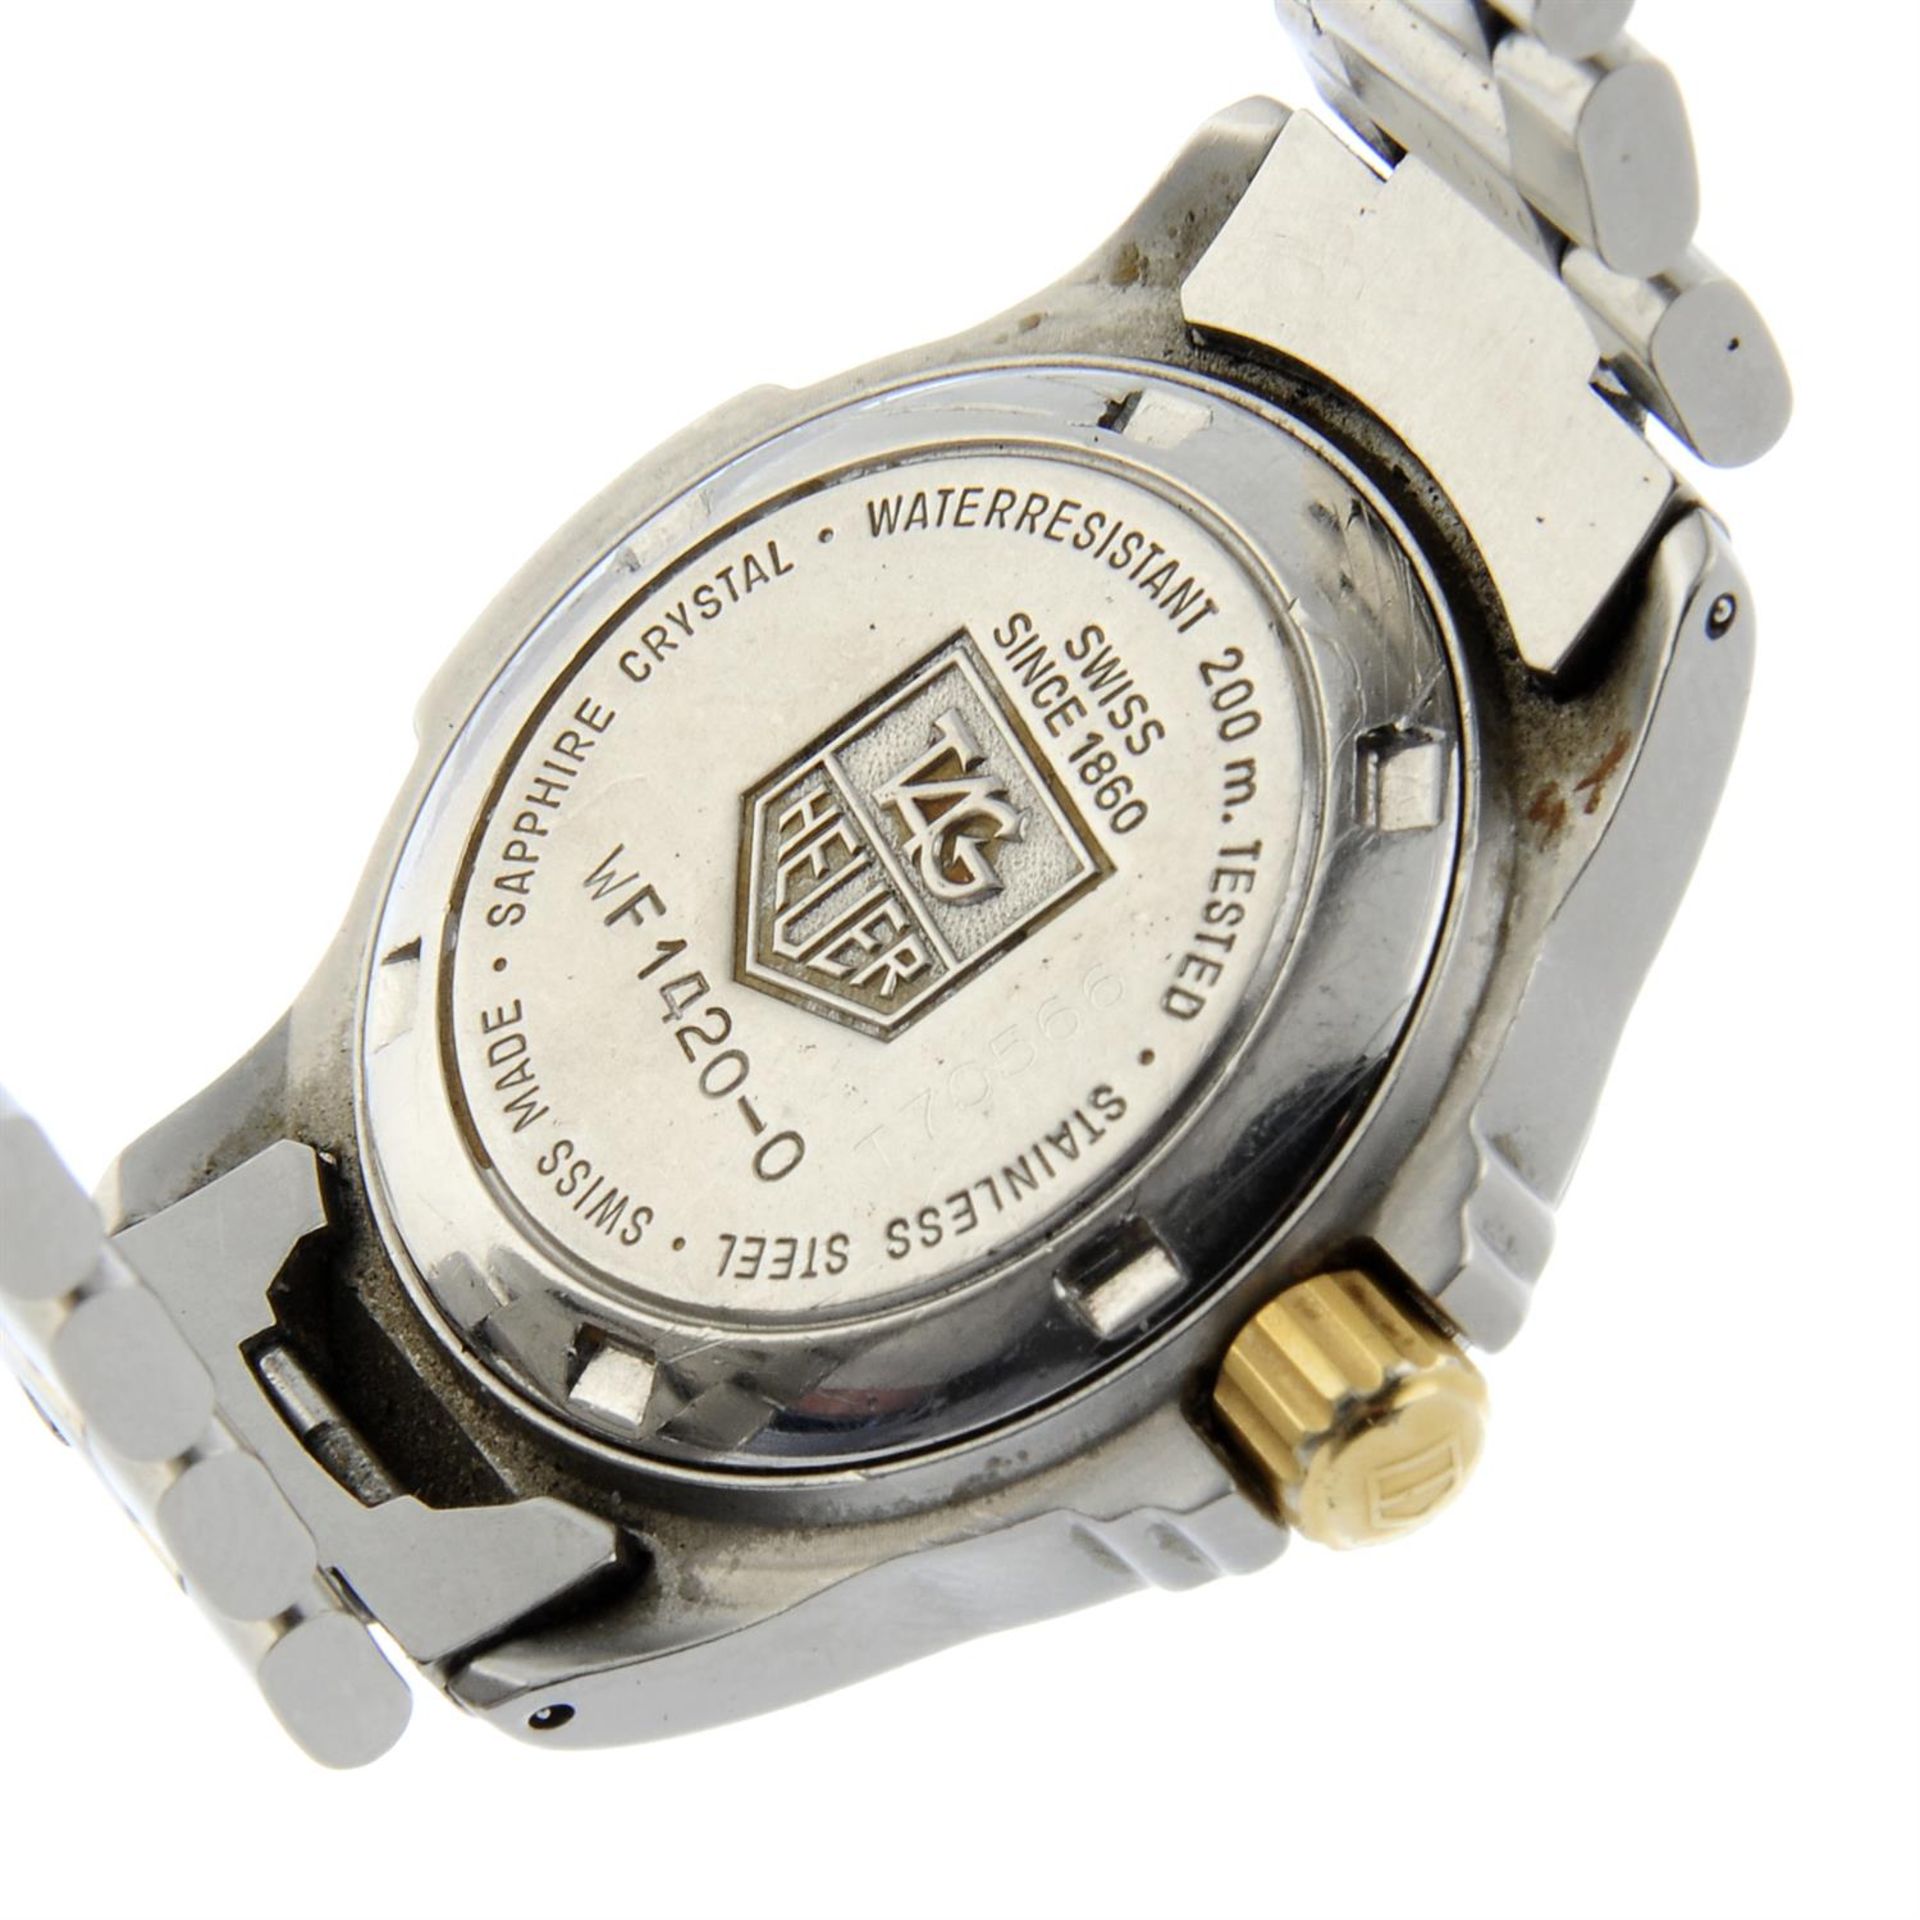 TAG HEUER - a bi-colour 4000 Series bracelet watch, 28mm. - Image 4 of 4